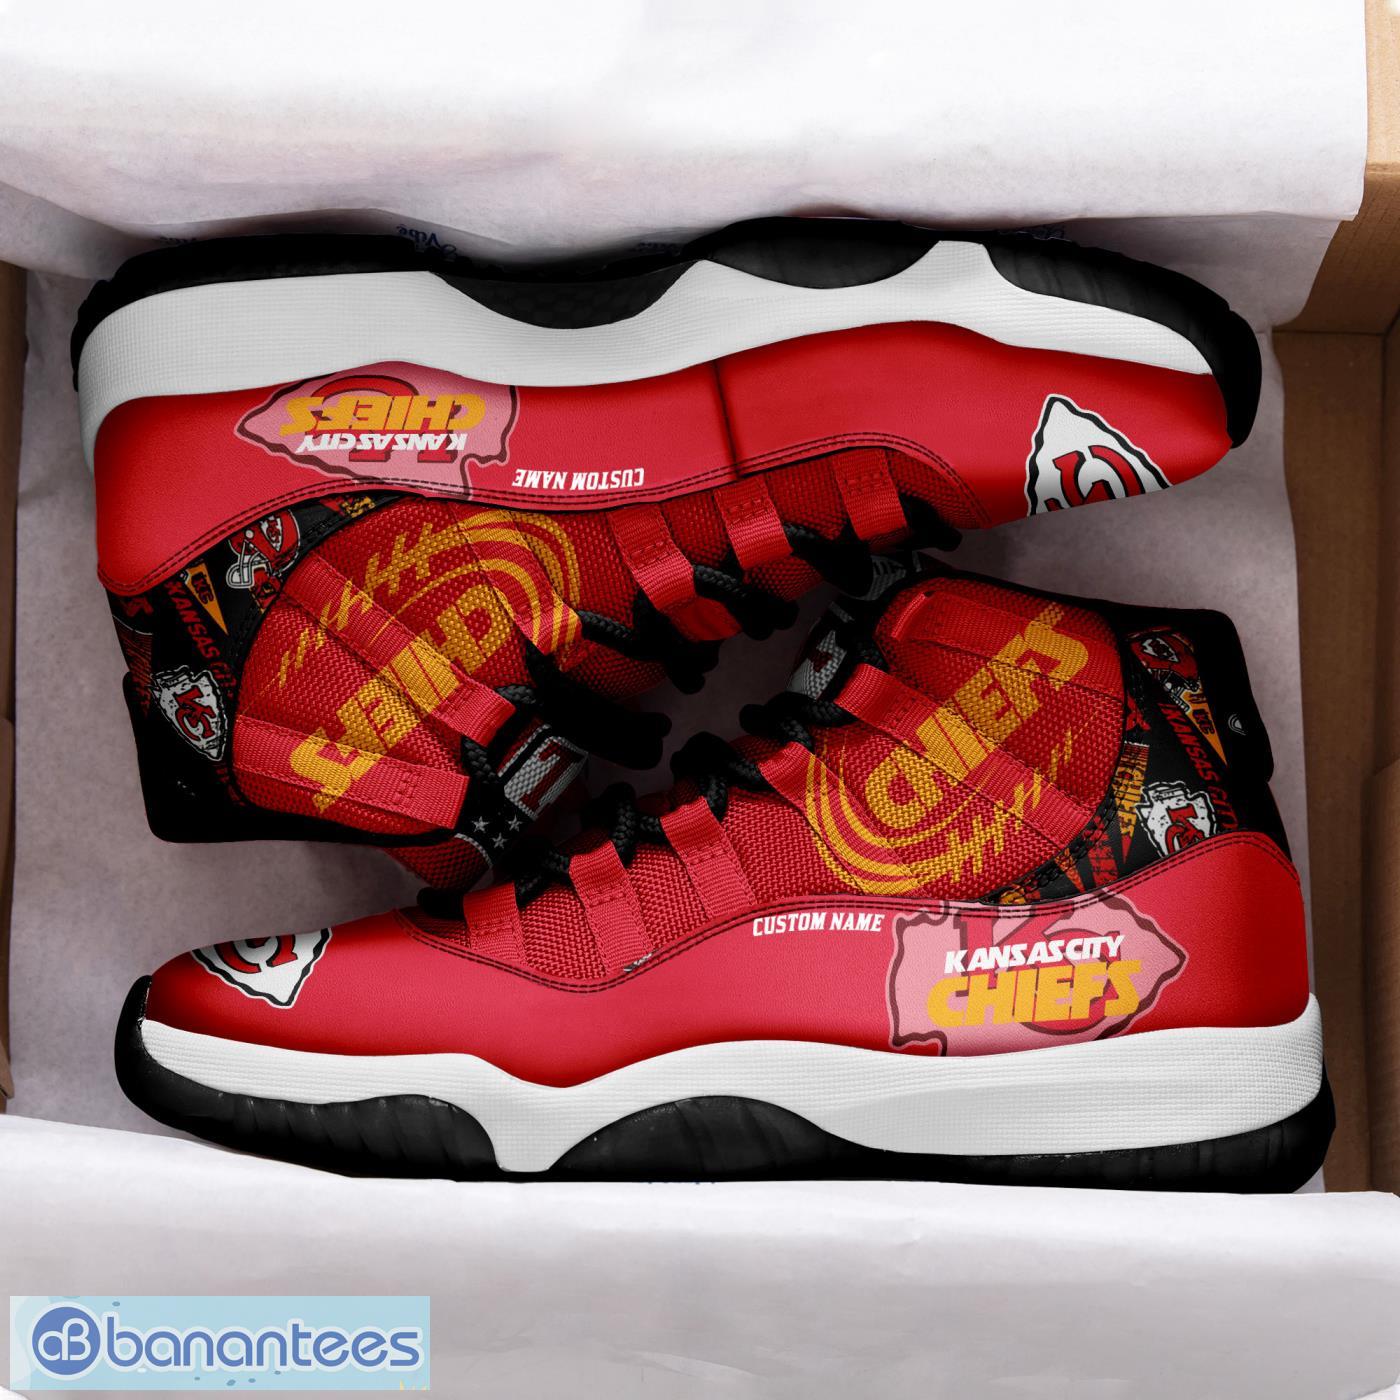 Kansas City Chiefs NFL Custom Name Air Jordan 11 Sneakers Shoes For Fans